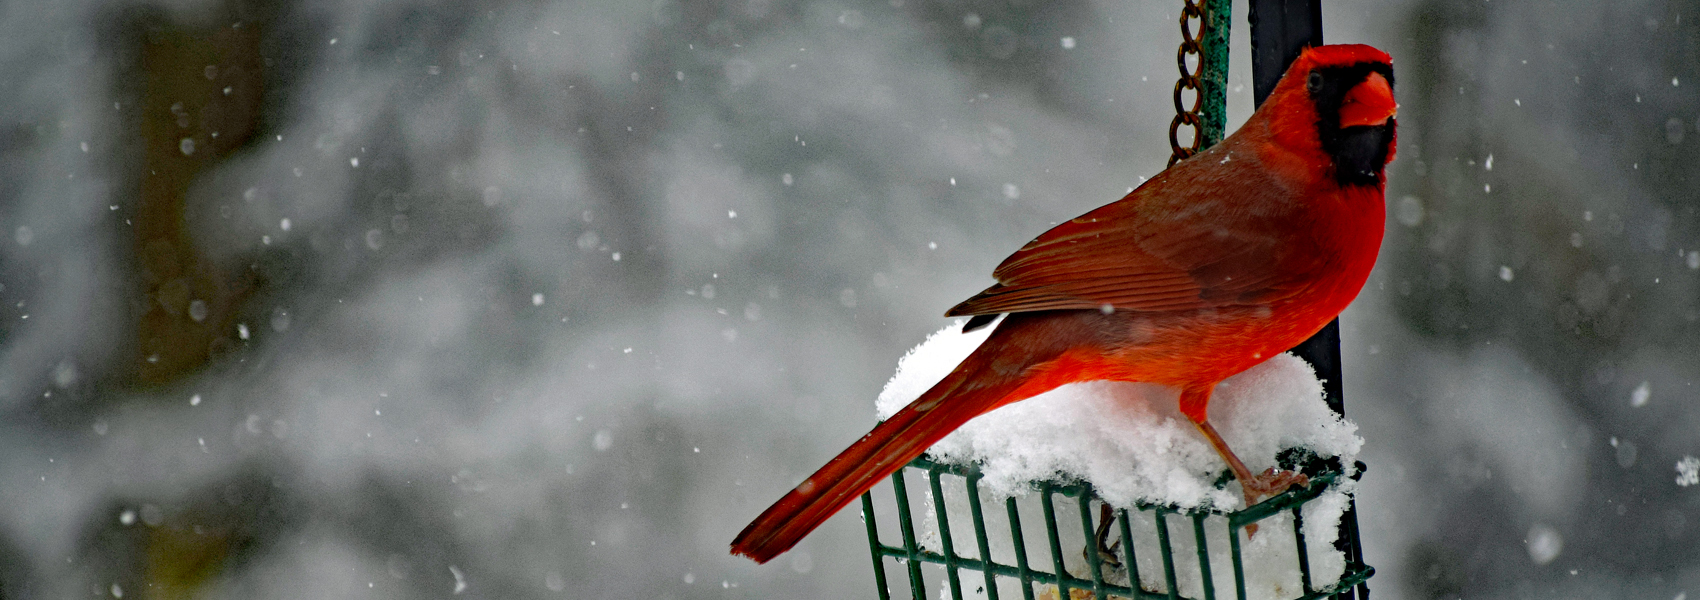 Male cardinal at a bird feeder in snow